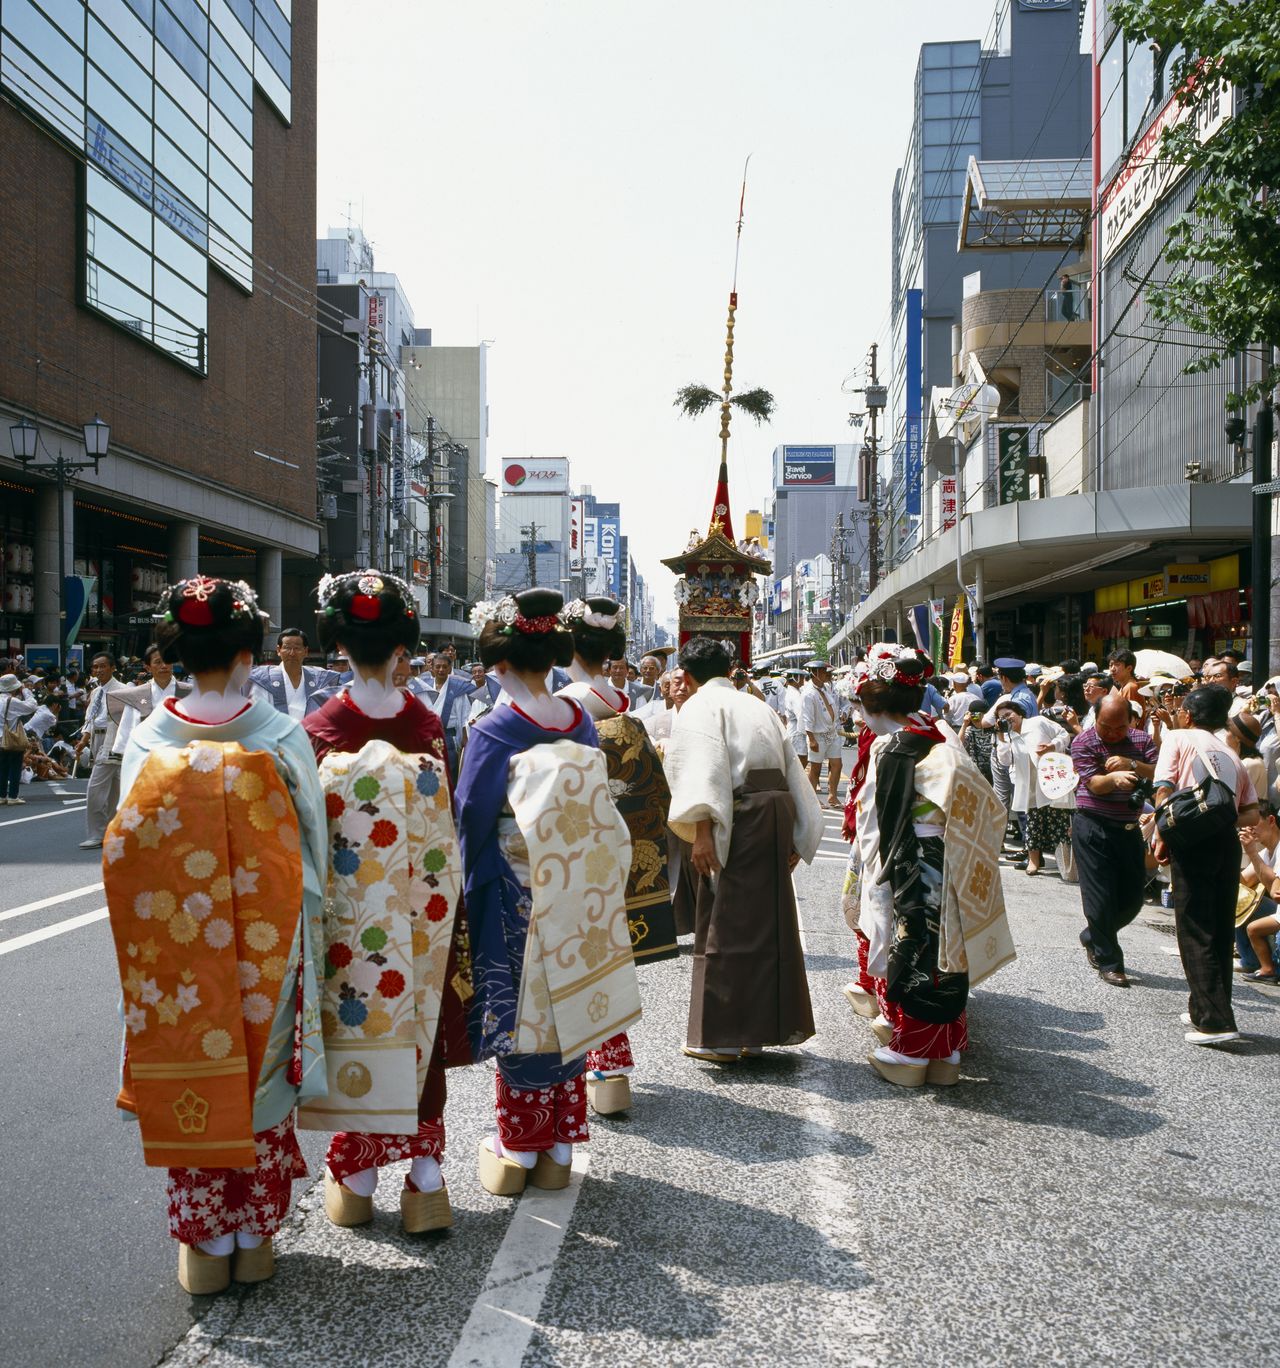 Maiko apprentice geisha await the procession. (© Haga Library)